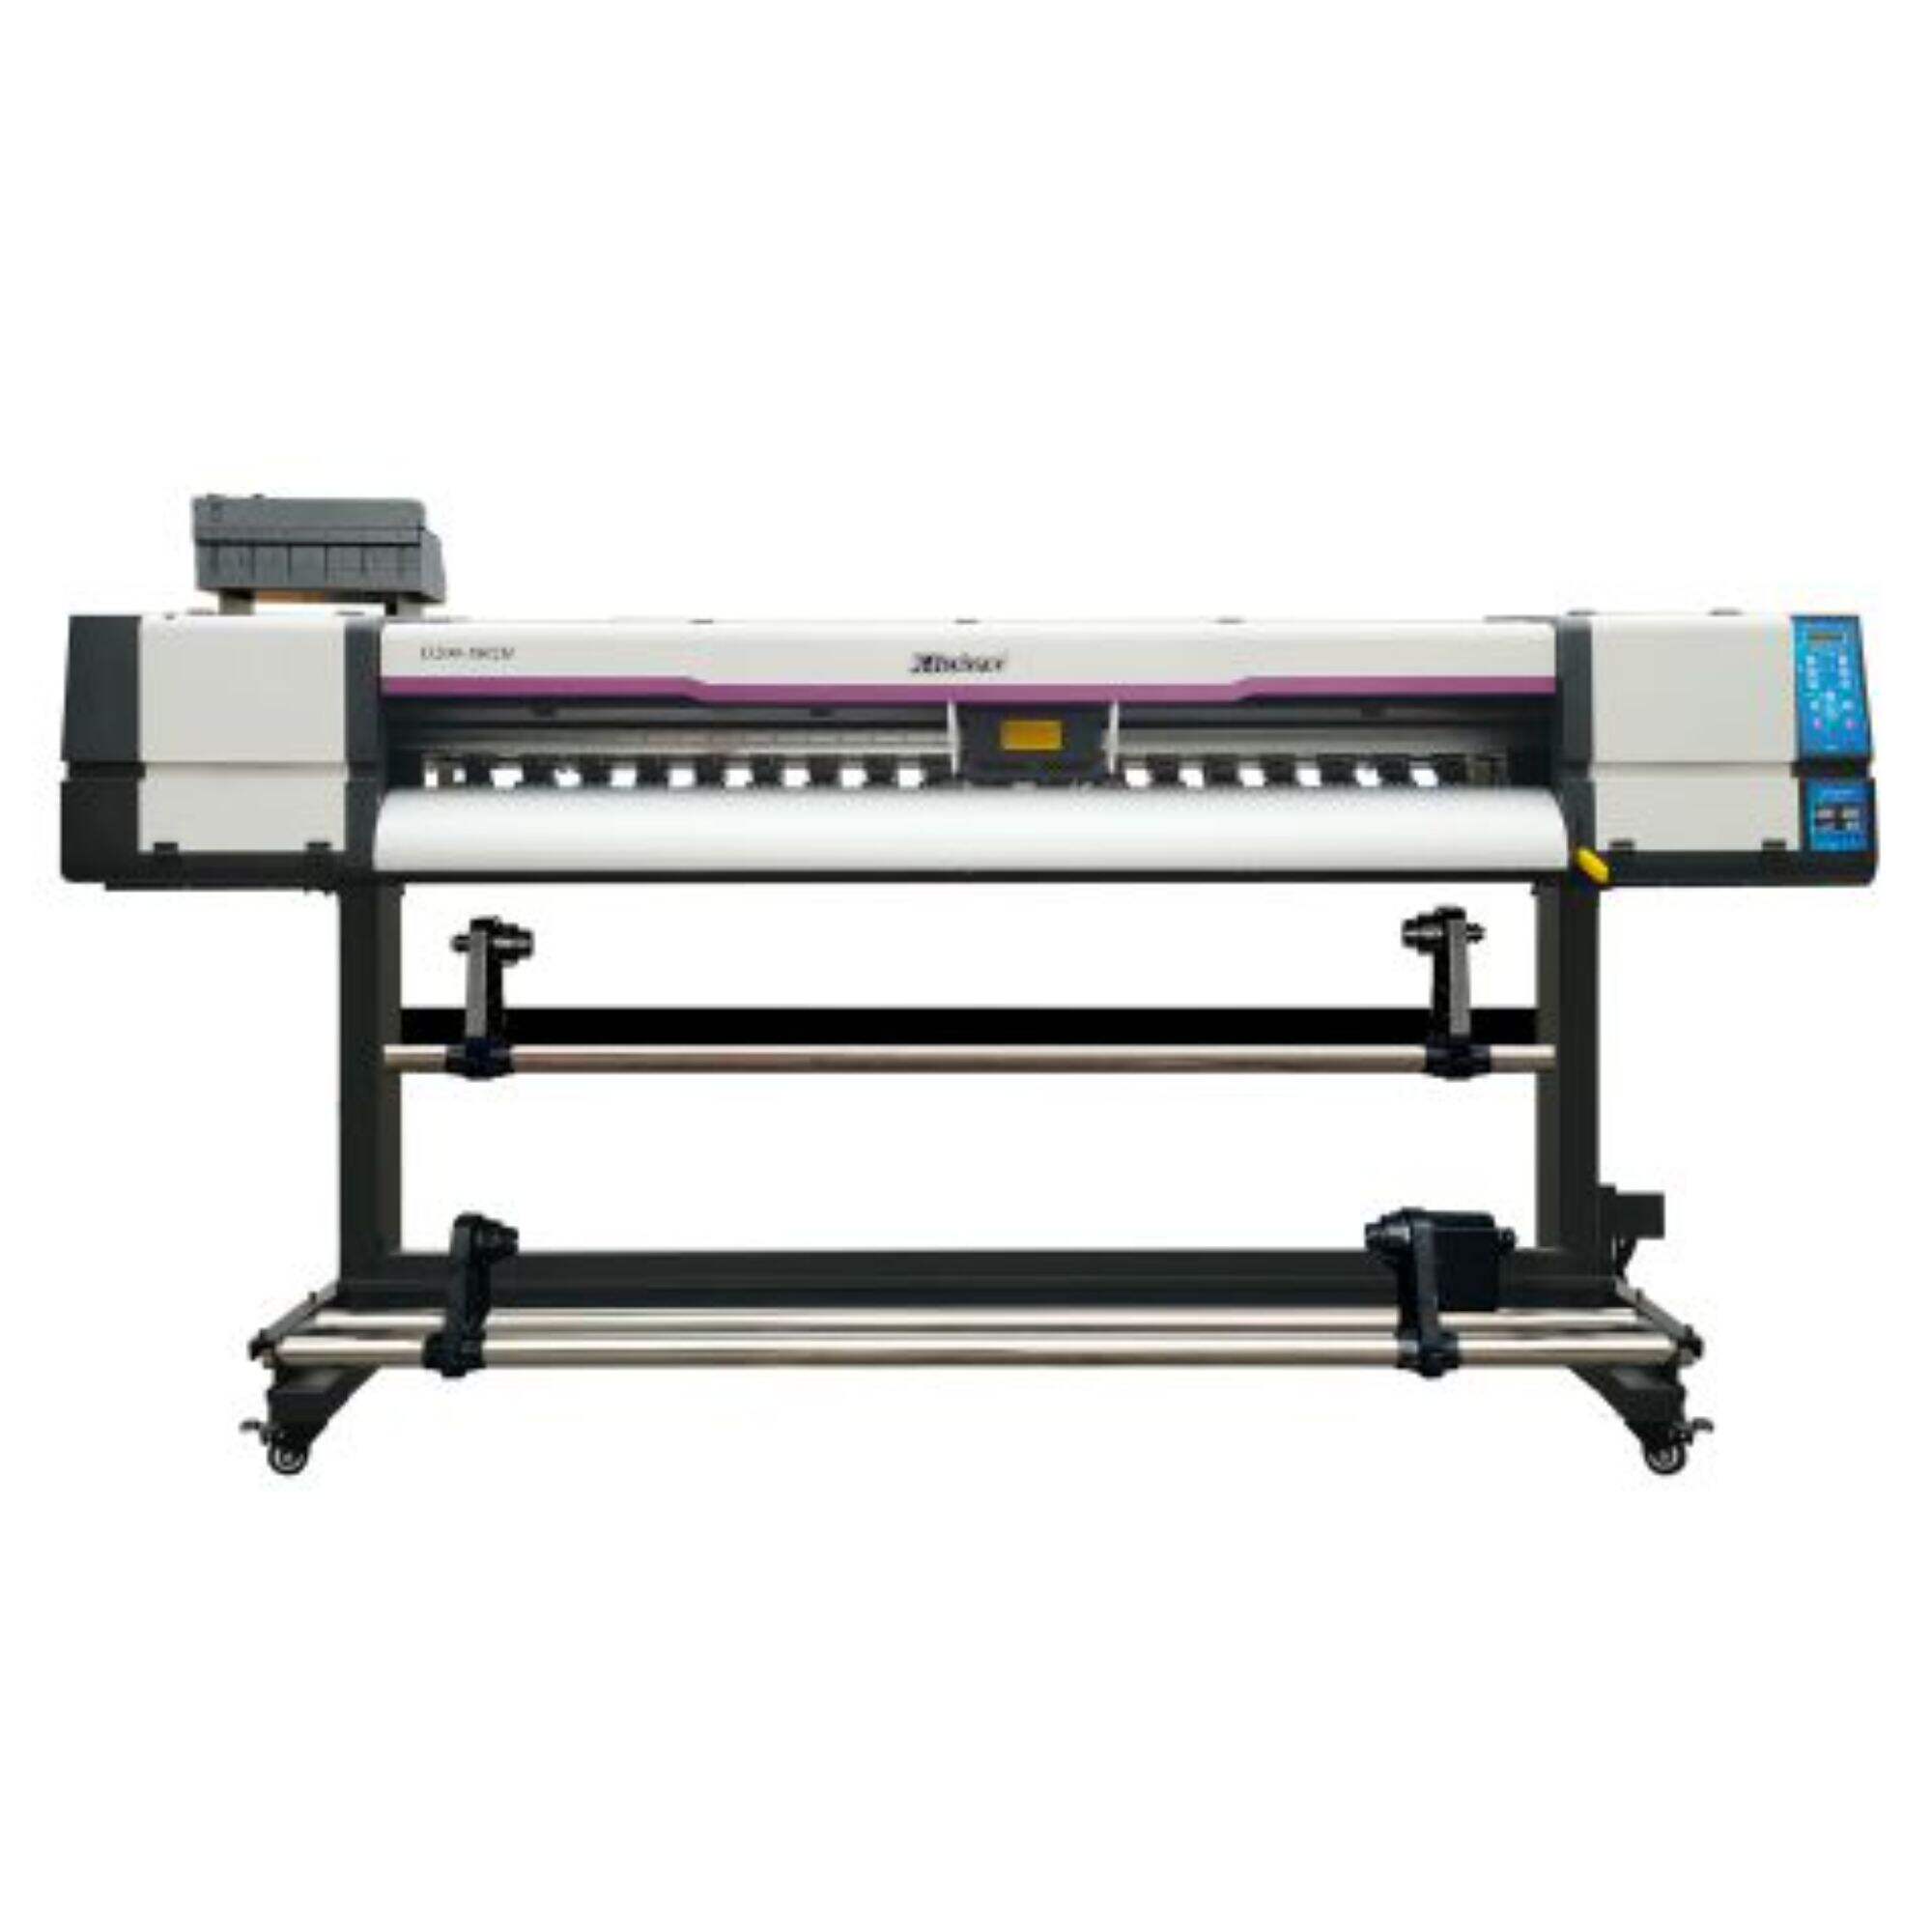 XL-1802H I3200 UV-printer